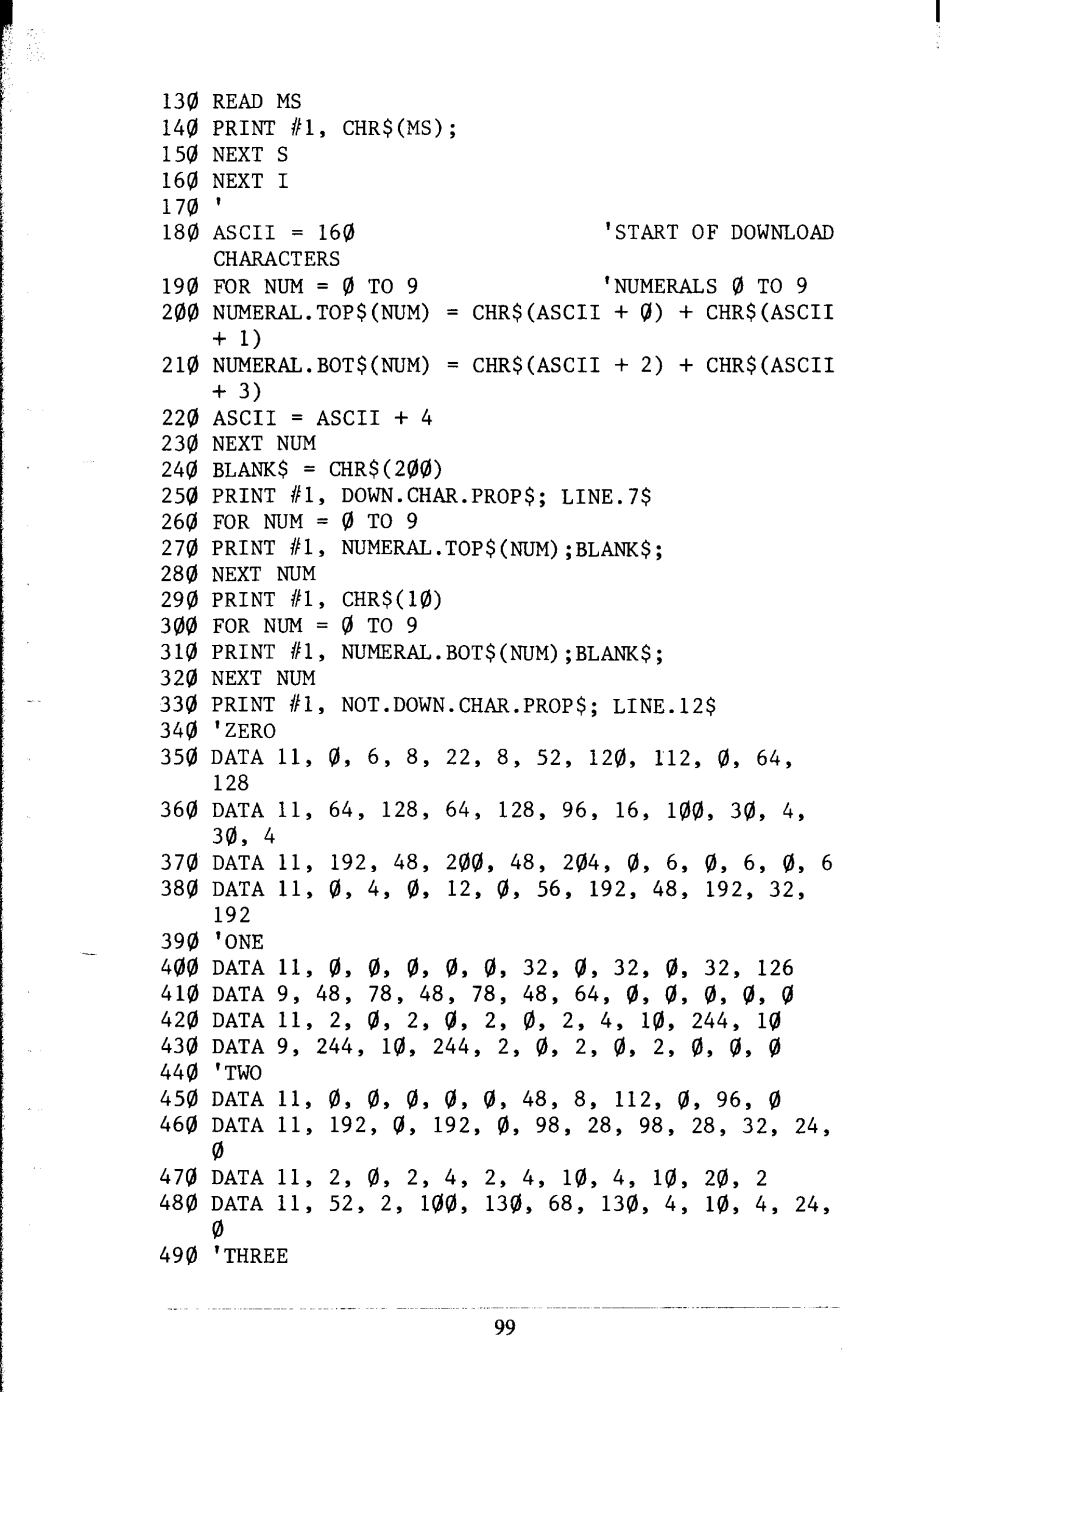 Star Micronics SR-10/I5 user manual DATA 11, 0, 0, 0, 0, 0, 32, 0, 32, 0, 32, DATA 11, 2, 0, 2, 0, 29 8, 2, 4, 10, 244 